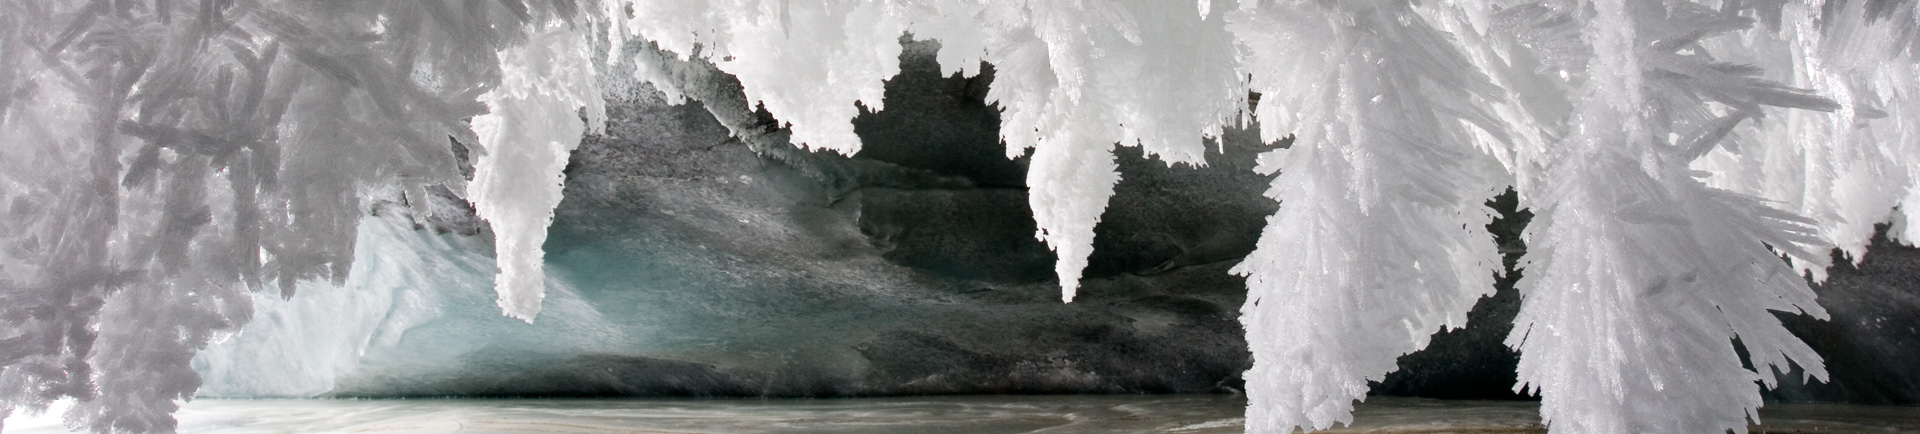 Ice cryatal cave